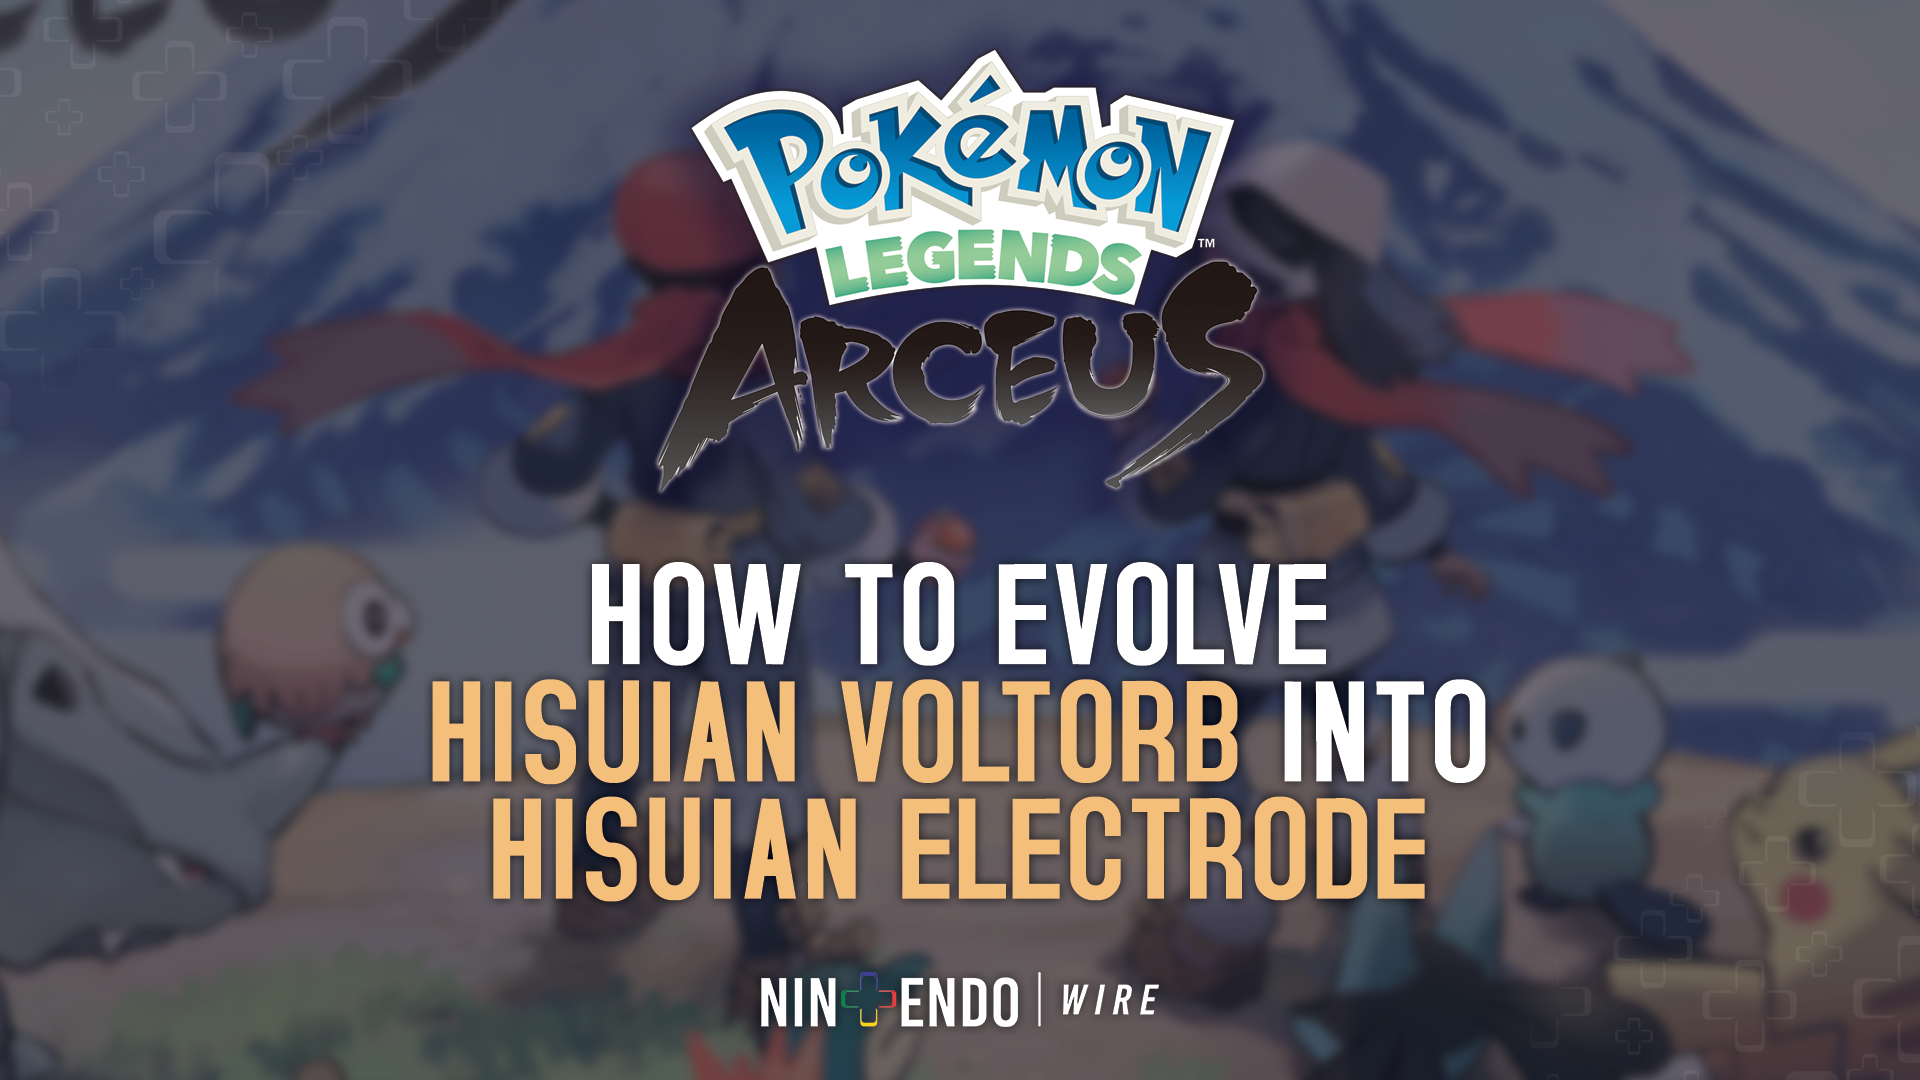 How to evolve Voltorb in Pokemon Legends: Arceus (November 2022)